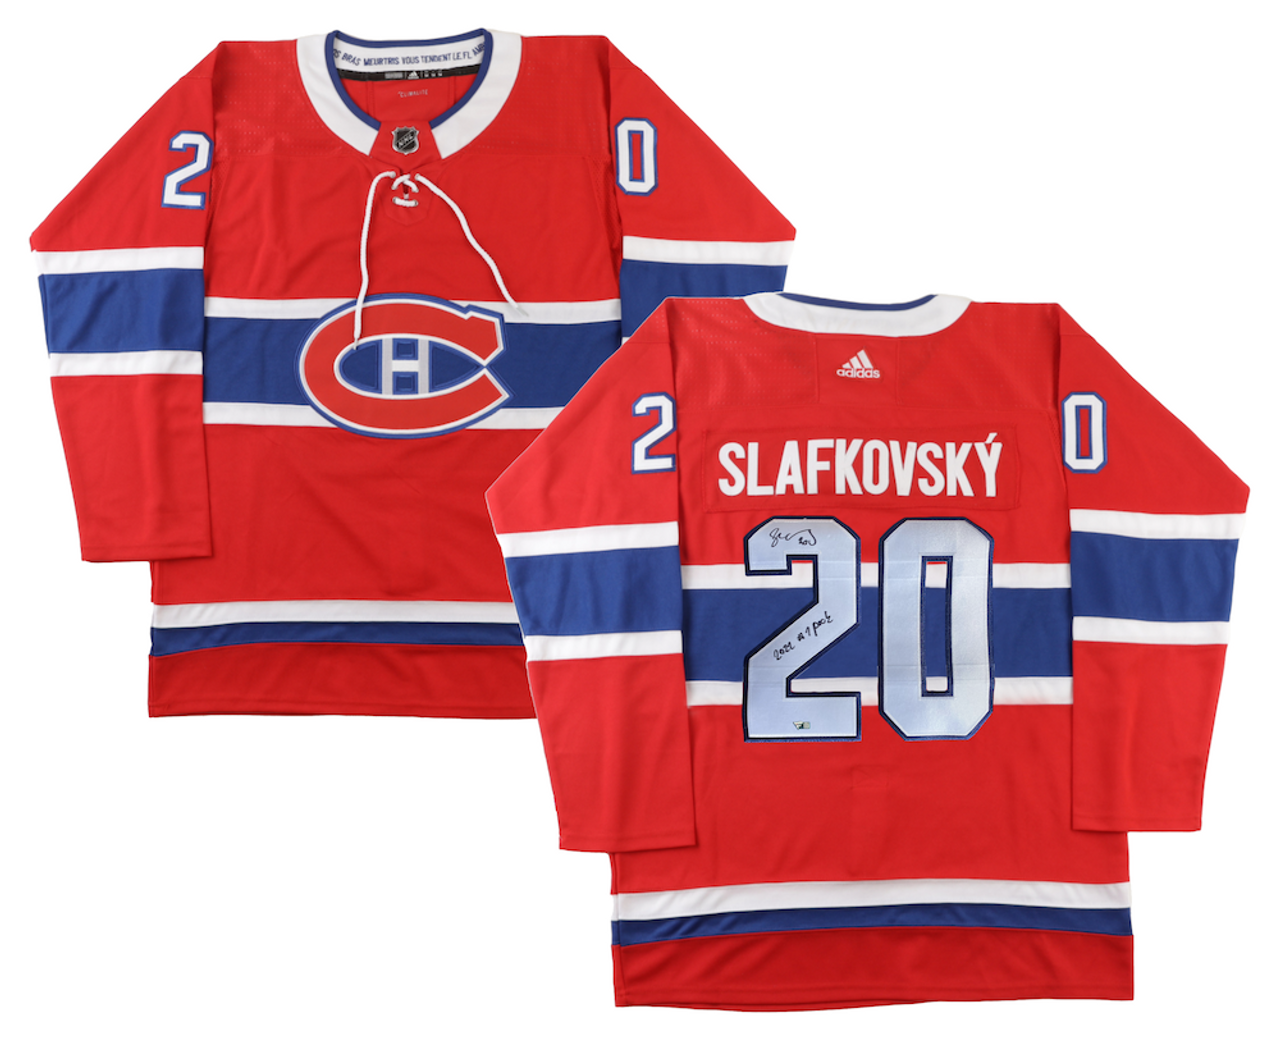 Fanatics Authentic Juraj Slafkovsky Montreal Canadiens Autographed Adidas White Authentic Jersey with 2022 #1 Pick Inscription